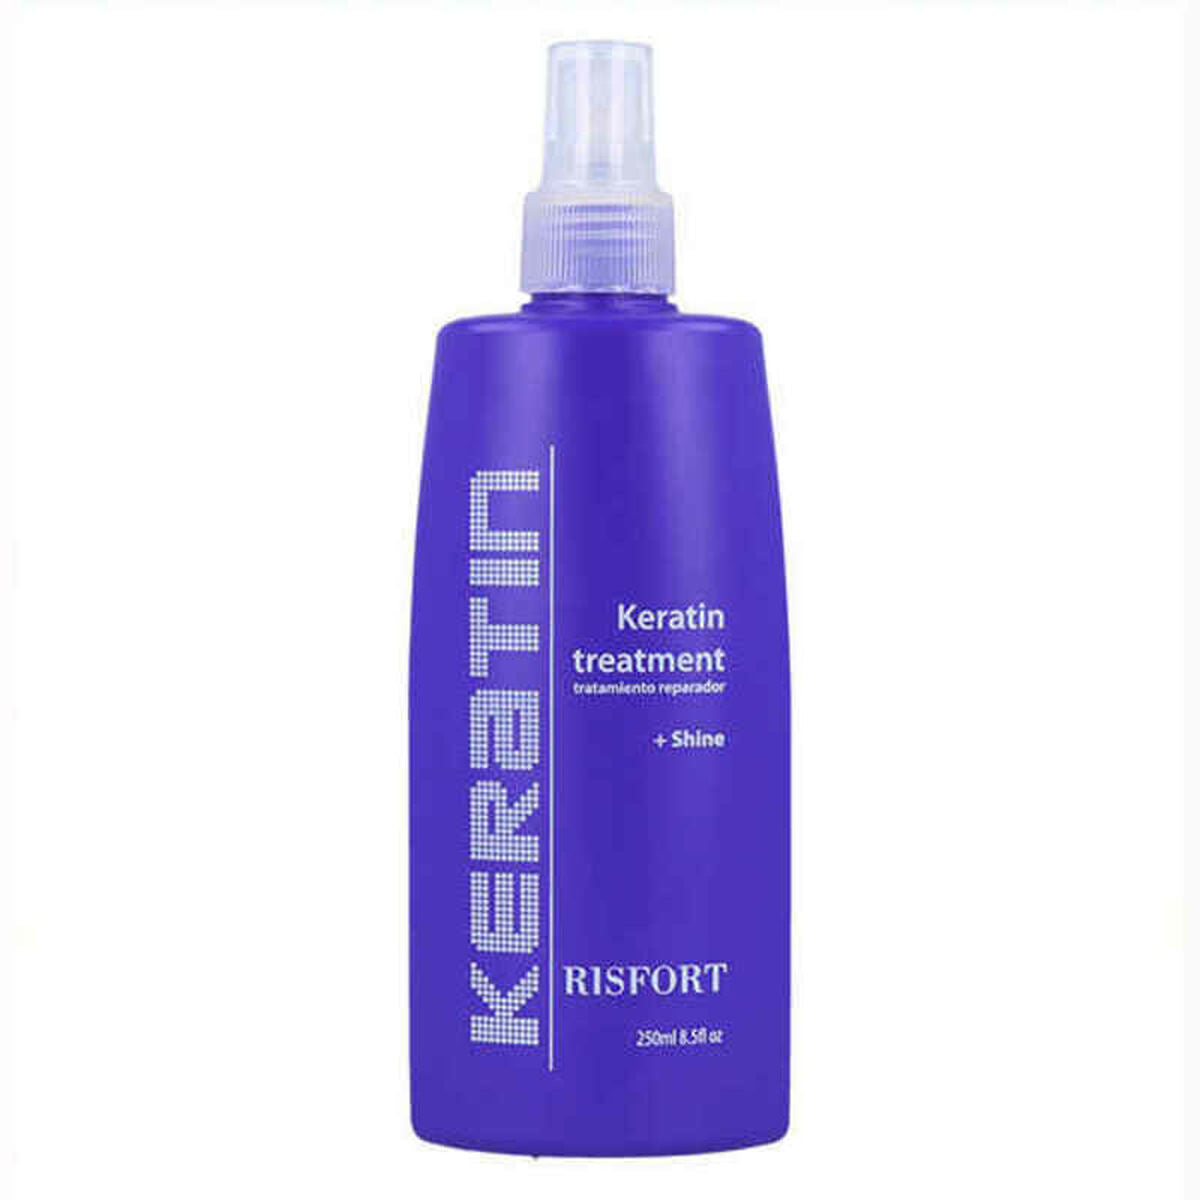 Hair Straightening Treatment Risfort Keratine (250 ml) | Risfort | Aylal Beauty